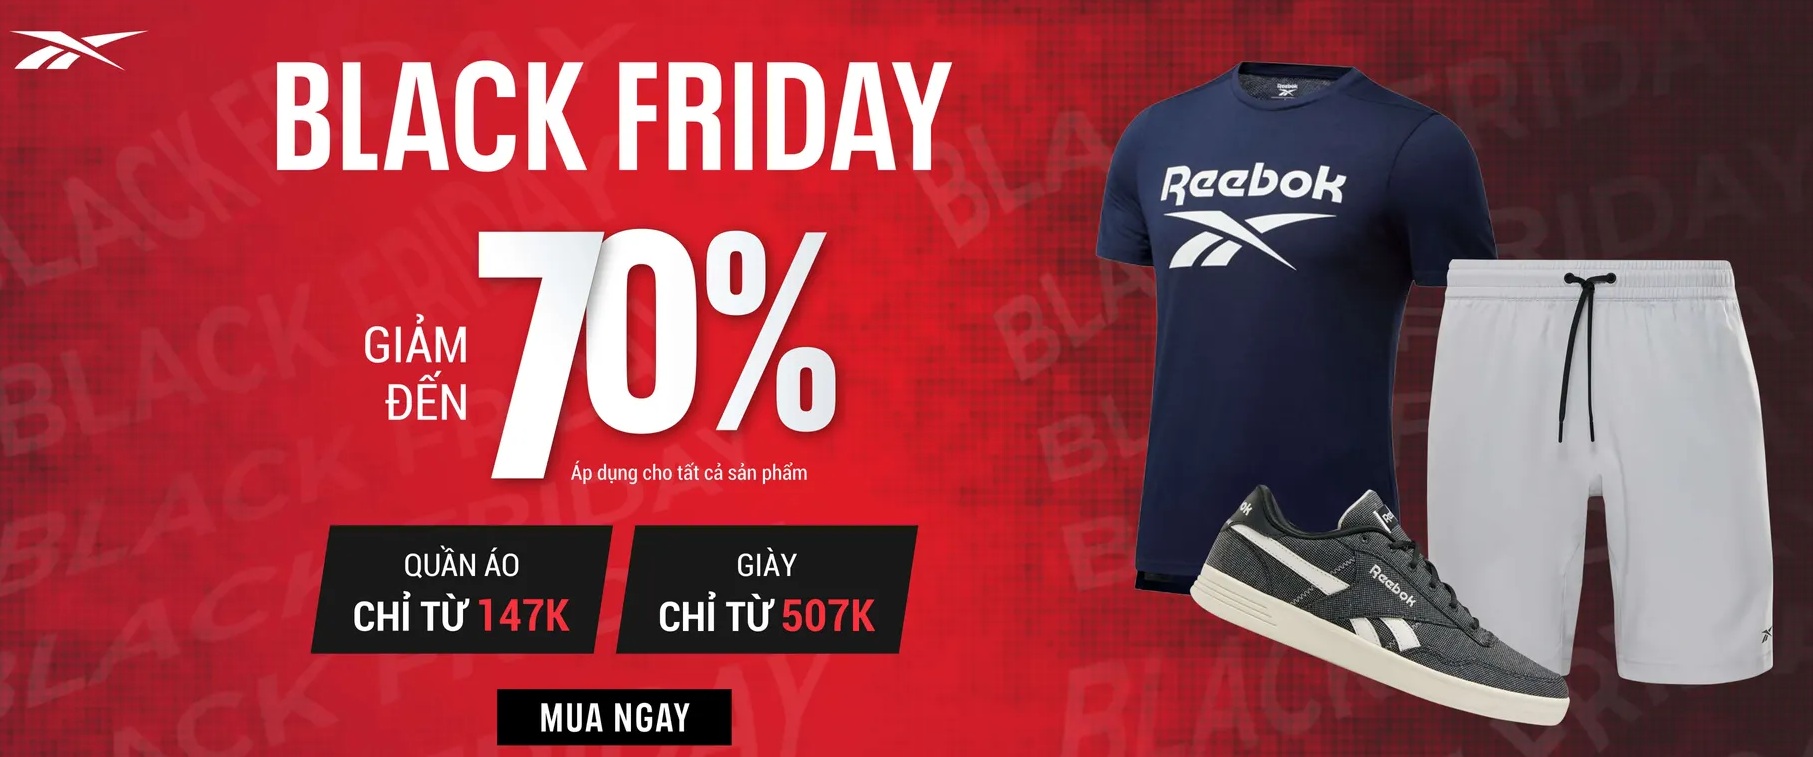 Reebok Black Friday Sale: 70% off tất cả sản phẩm